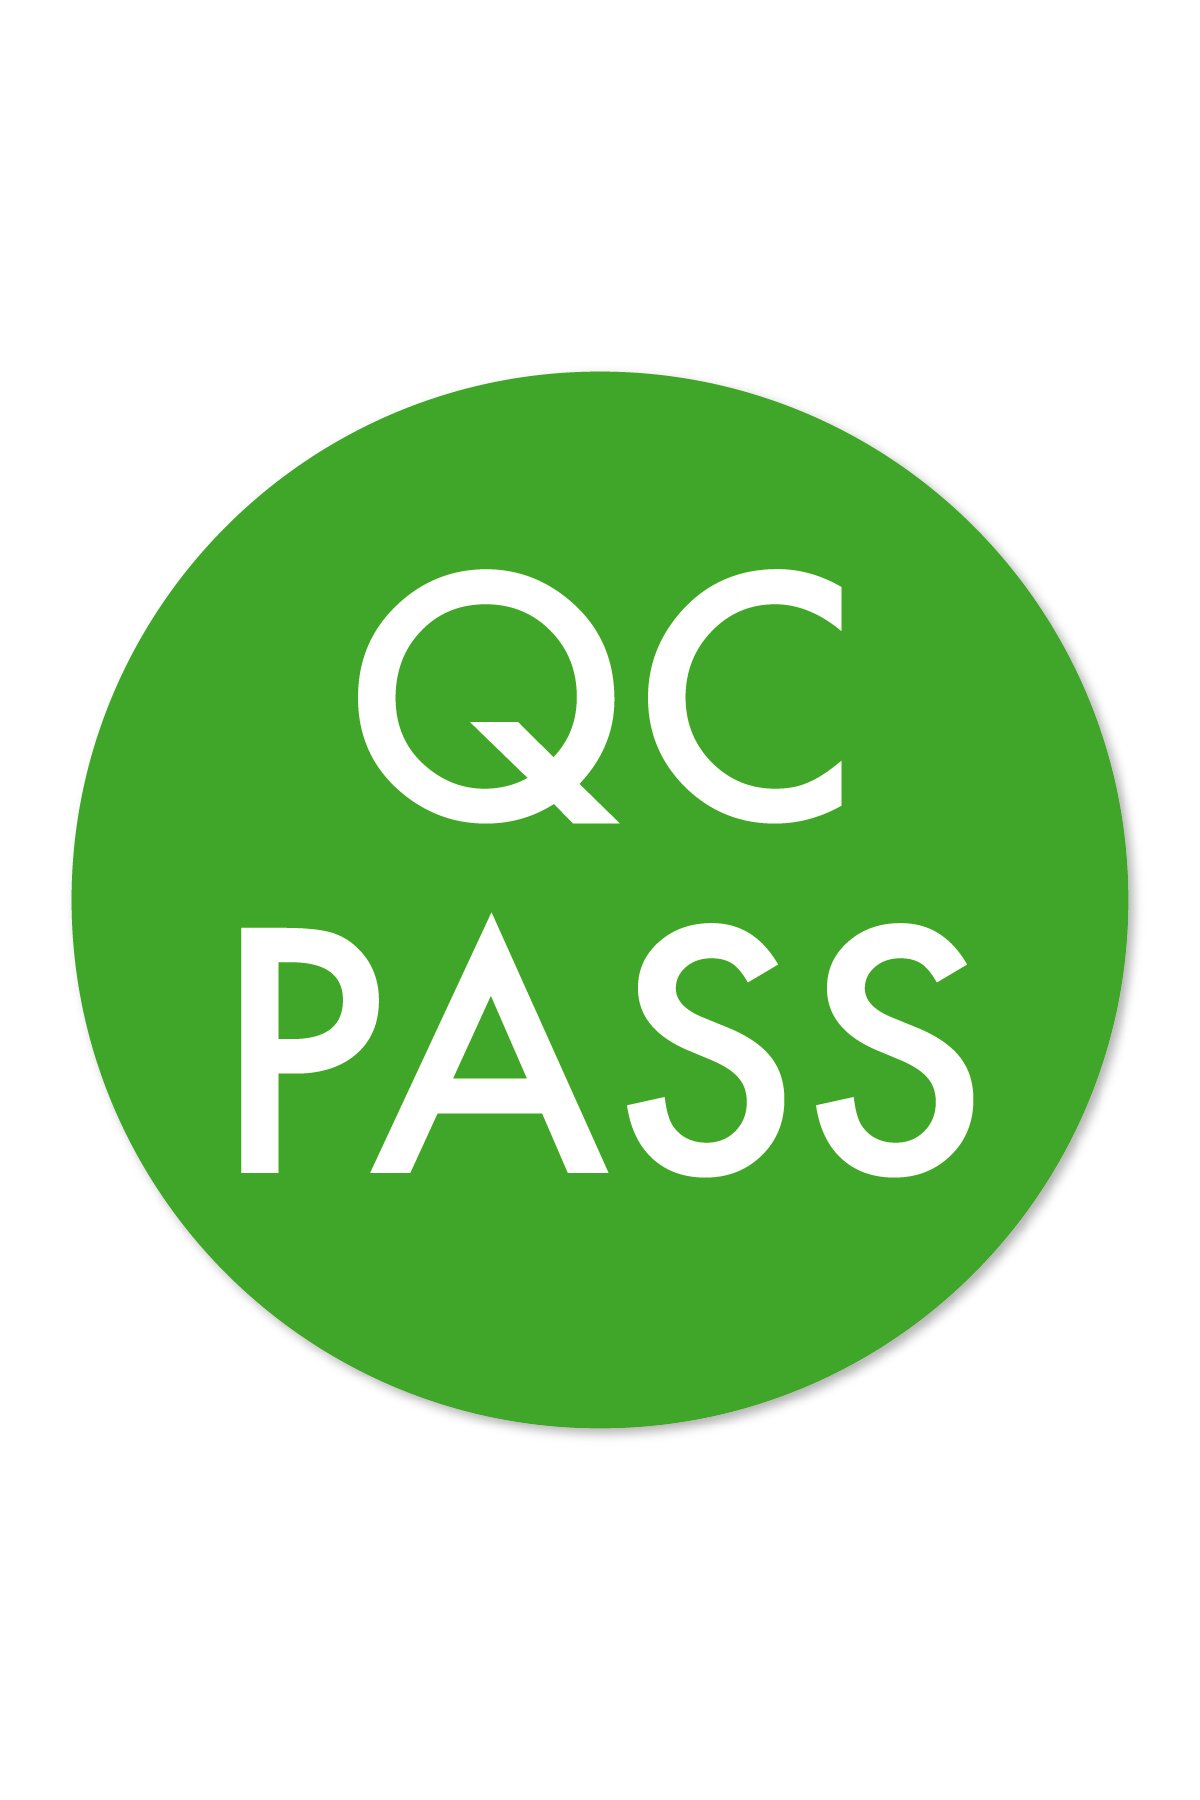 Kontrol sticker etiketi - qc pass sticker 1 plakada 100 etiket vardır.